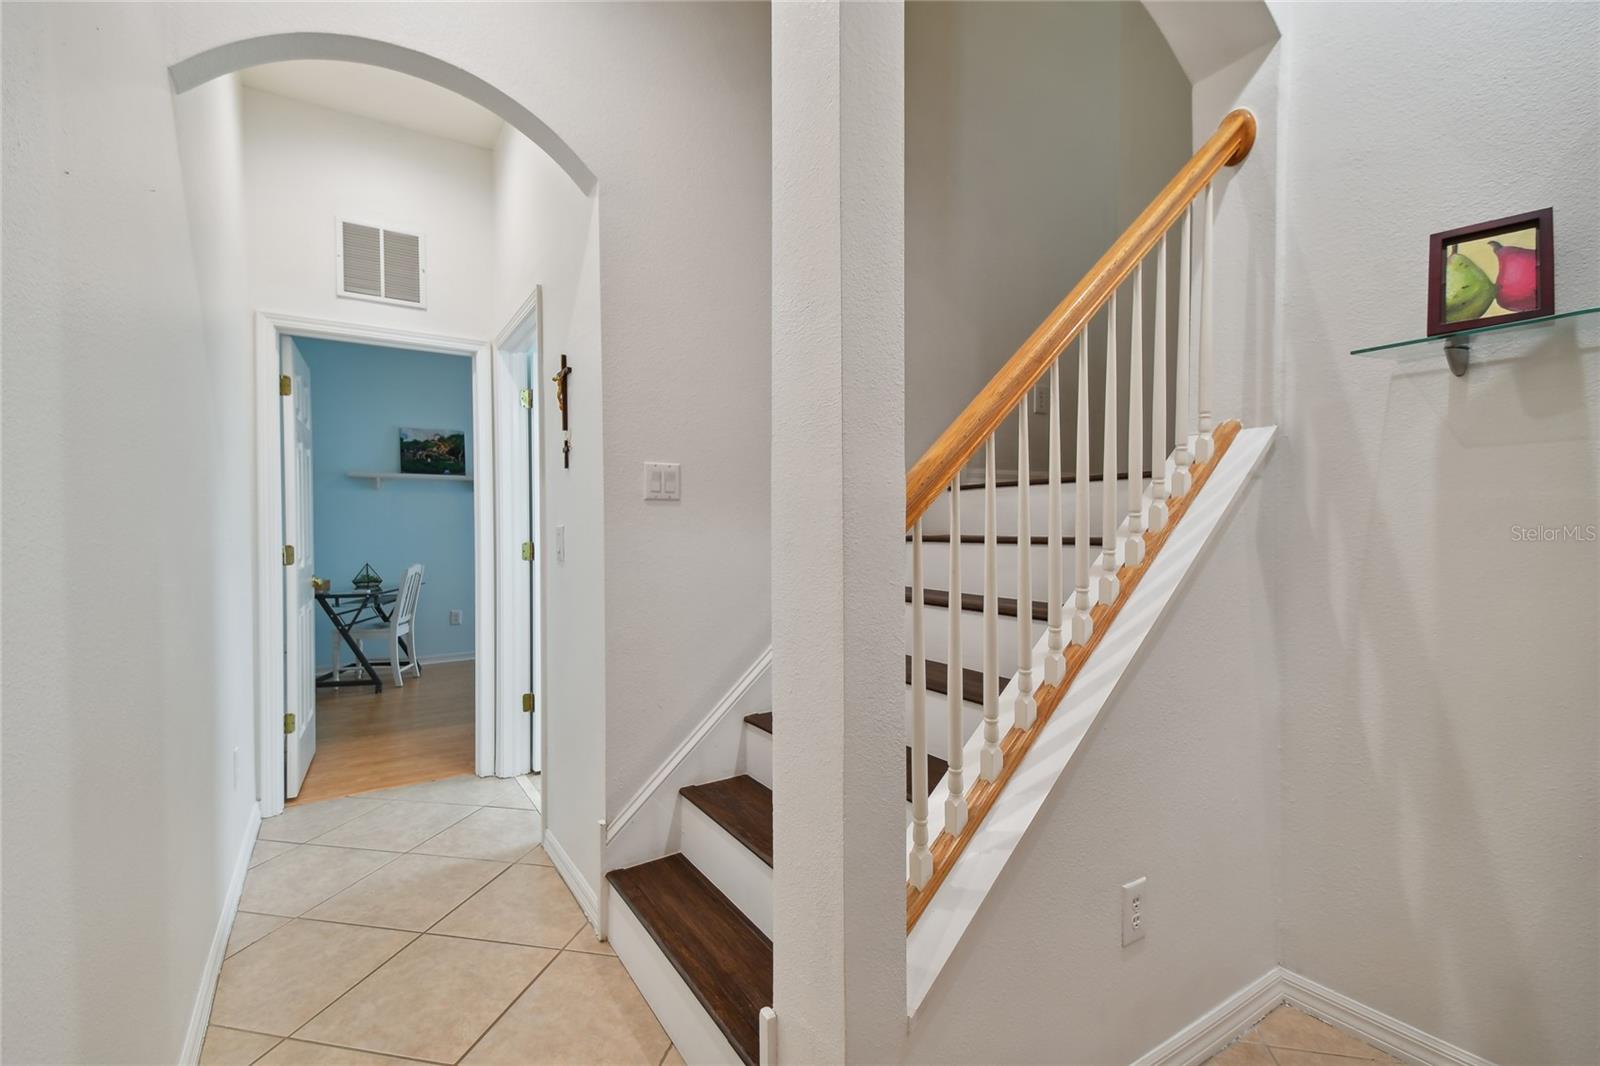 Stairs to upstairs bedroom/bonus room